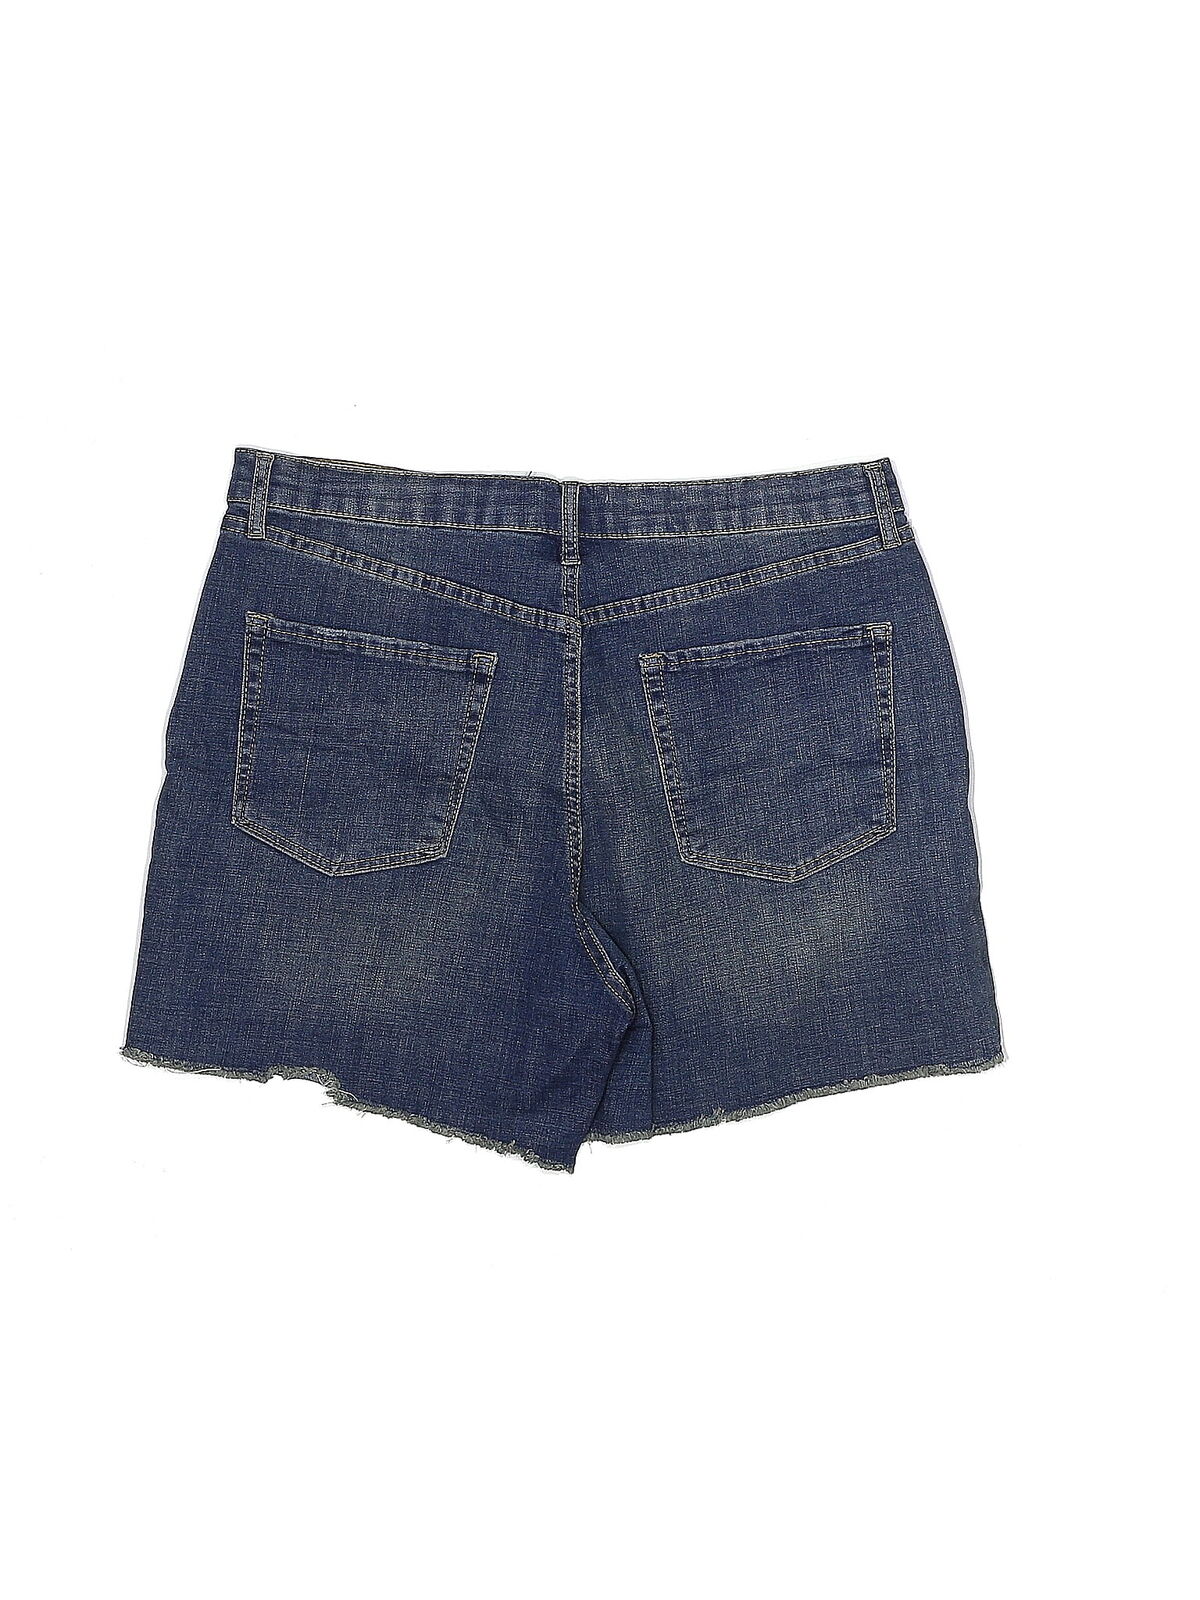 Jessica Simpson Women Blue Denim Shorts 16 - image 2